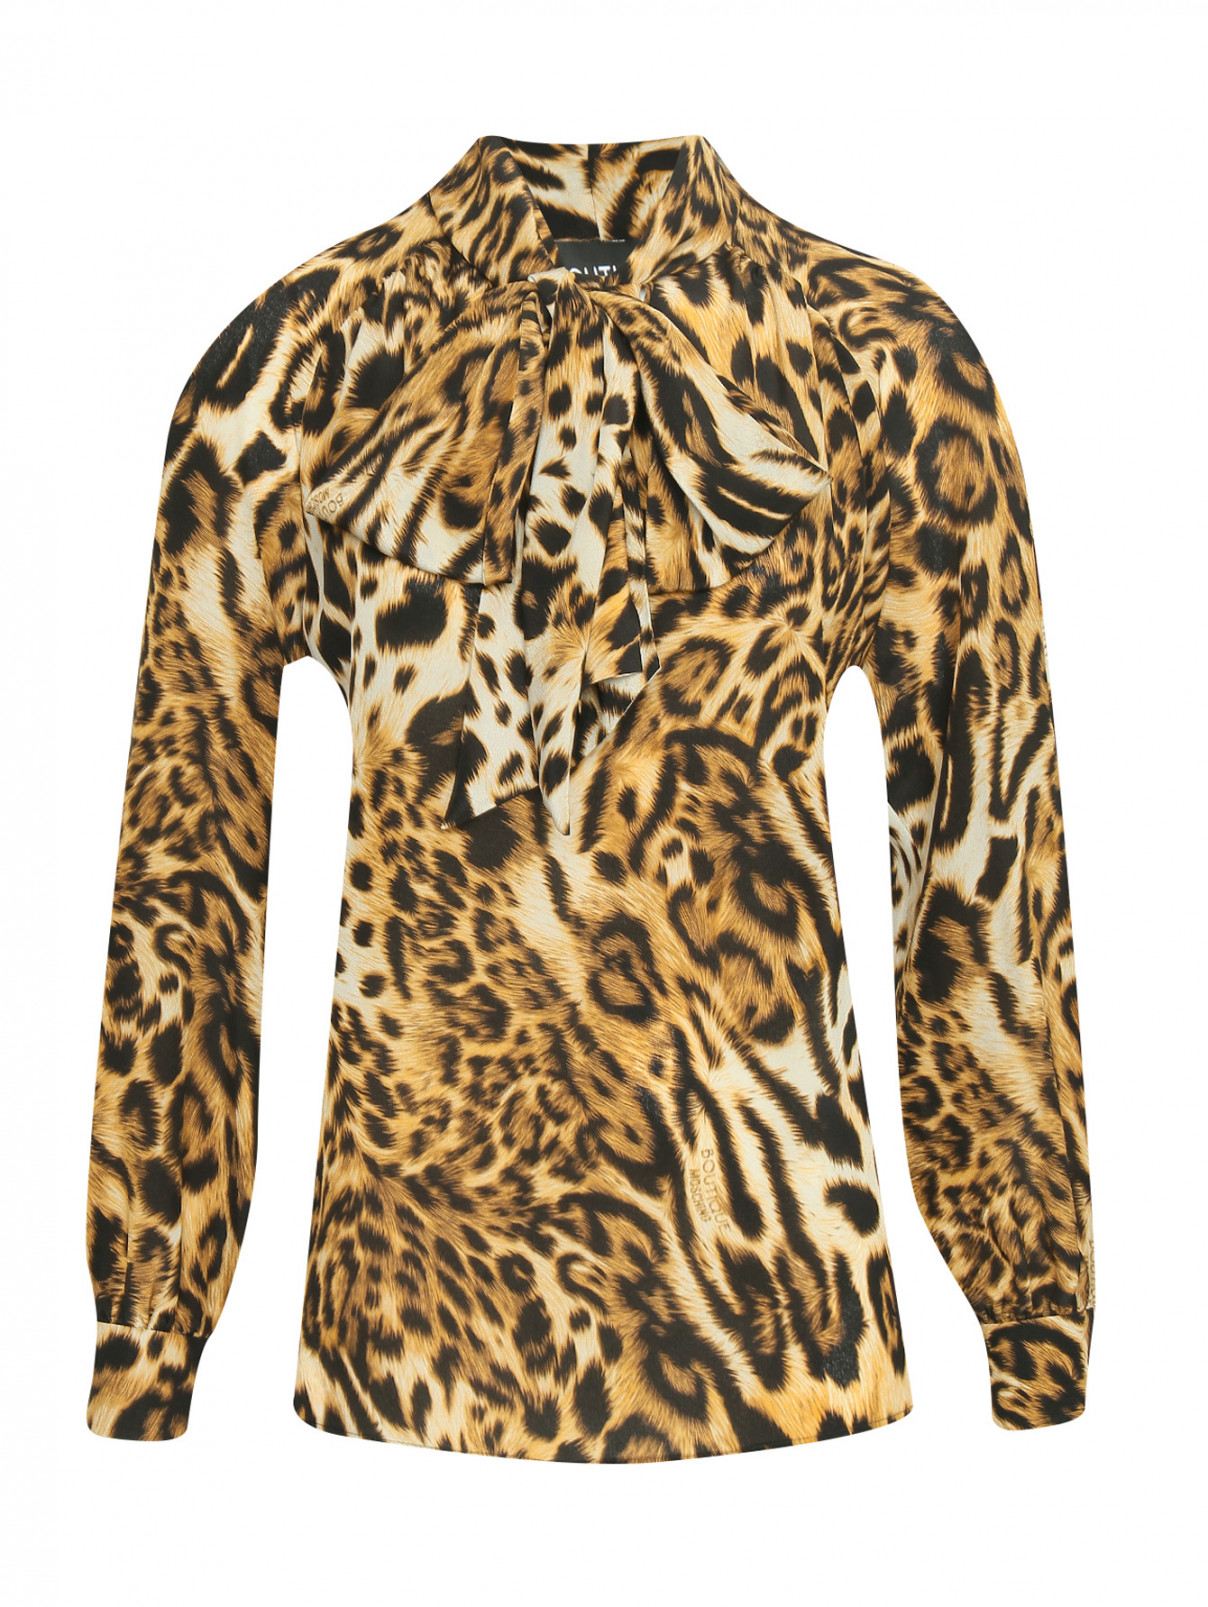 Блуза из шелка с узором Moschino Boutique  –  Общий вид  – Цвет:  Узор